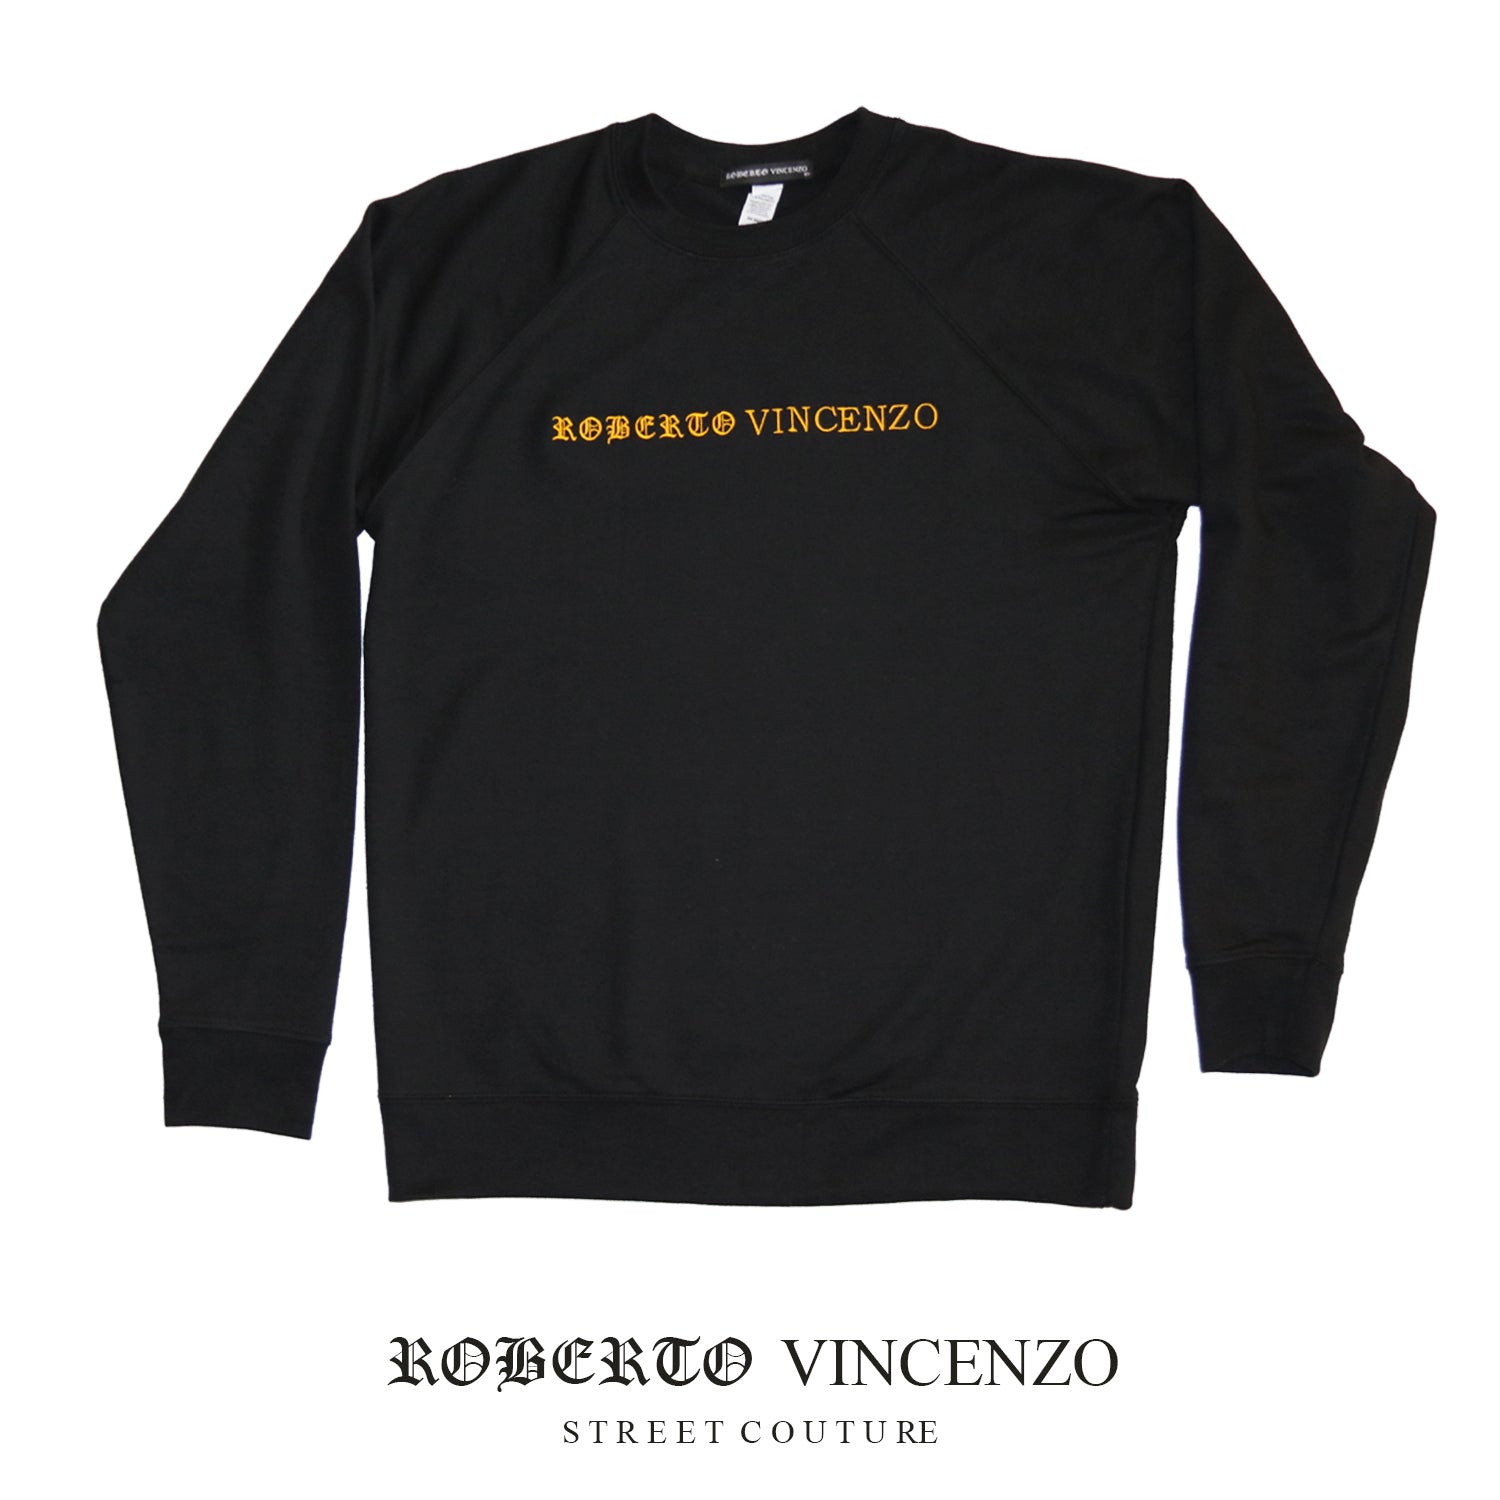 Roberto Vincenzo Crew neck (Black sweatshirt)